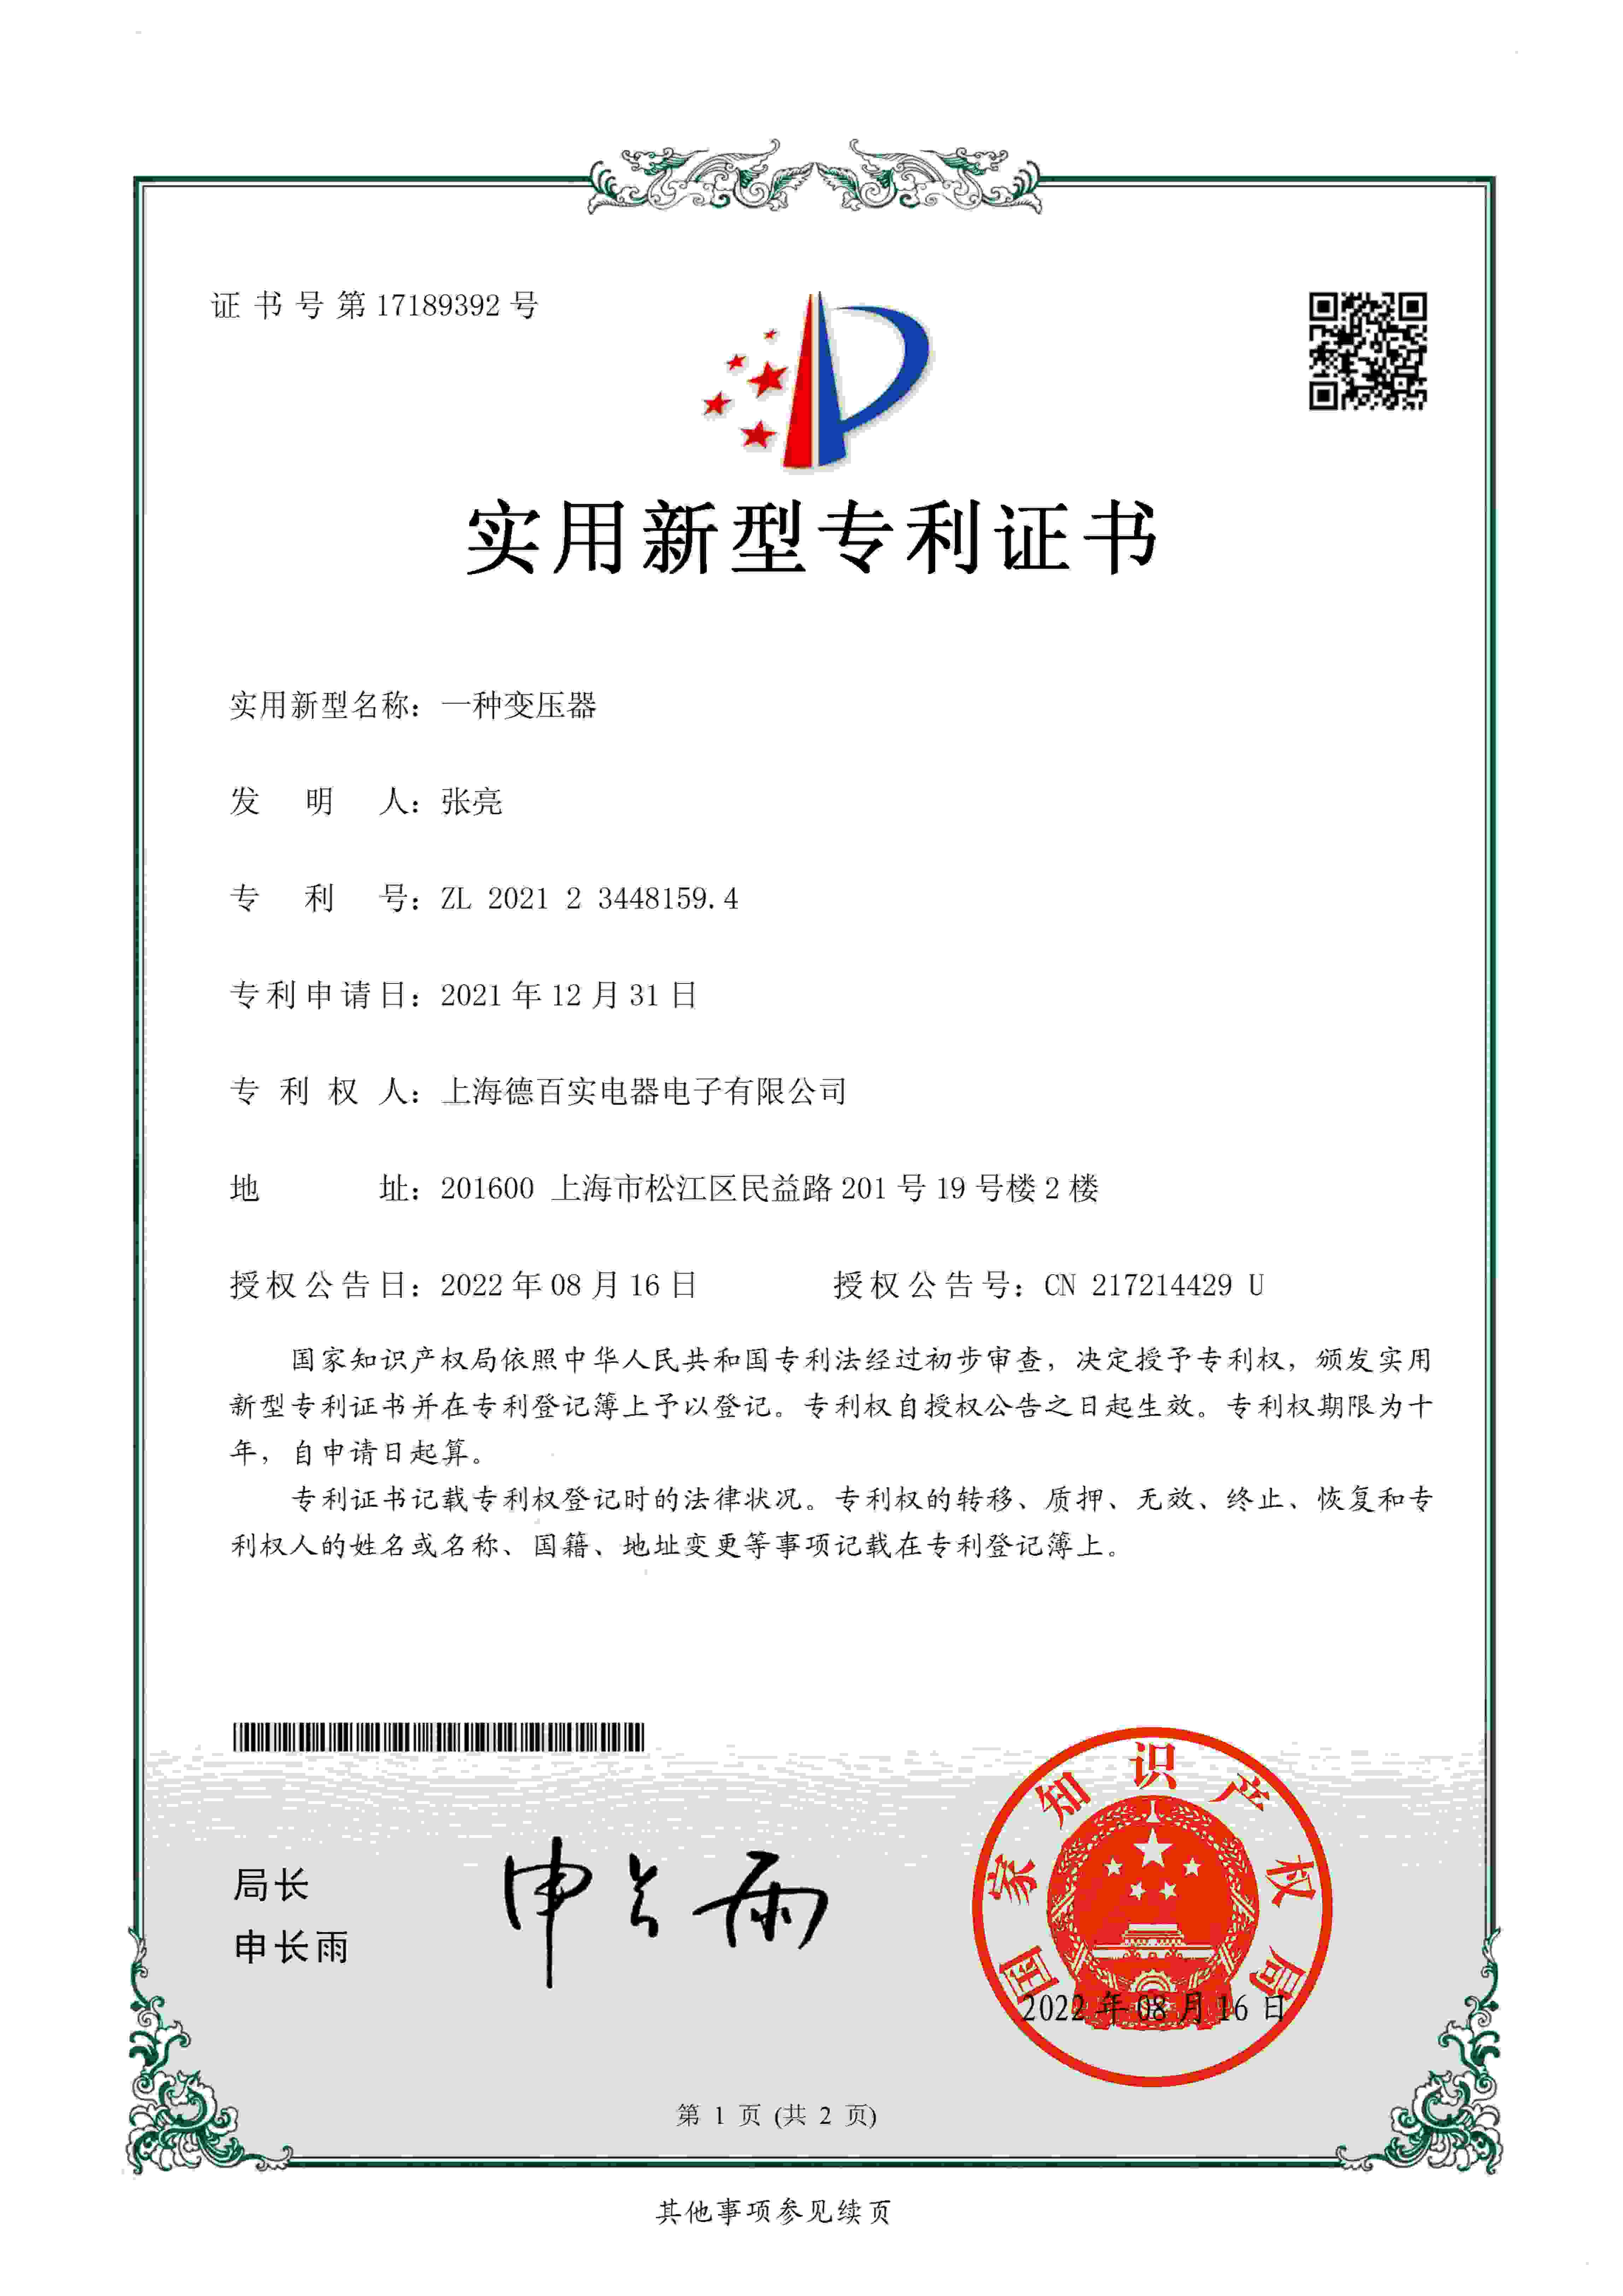 TPS certificate